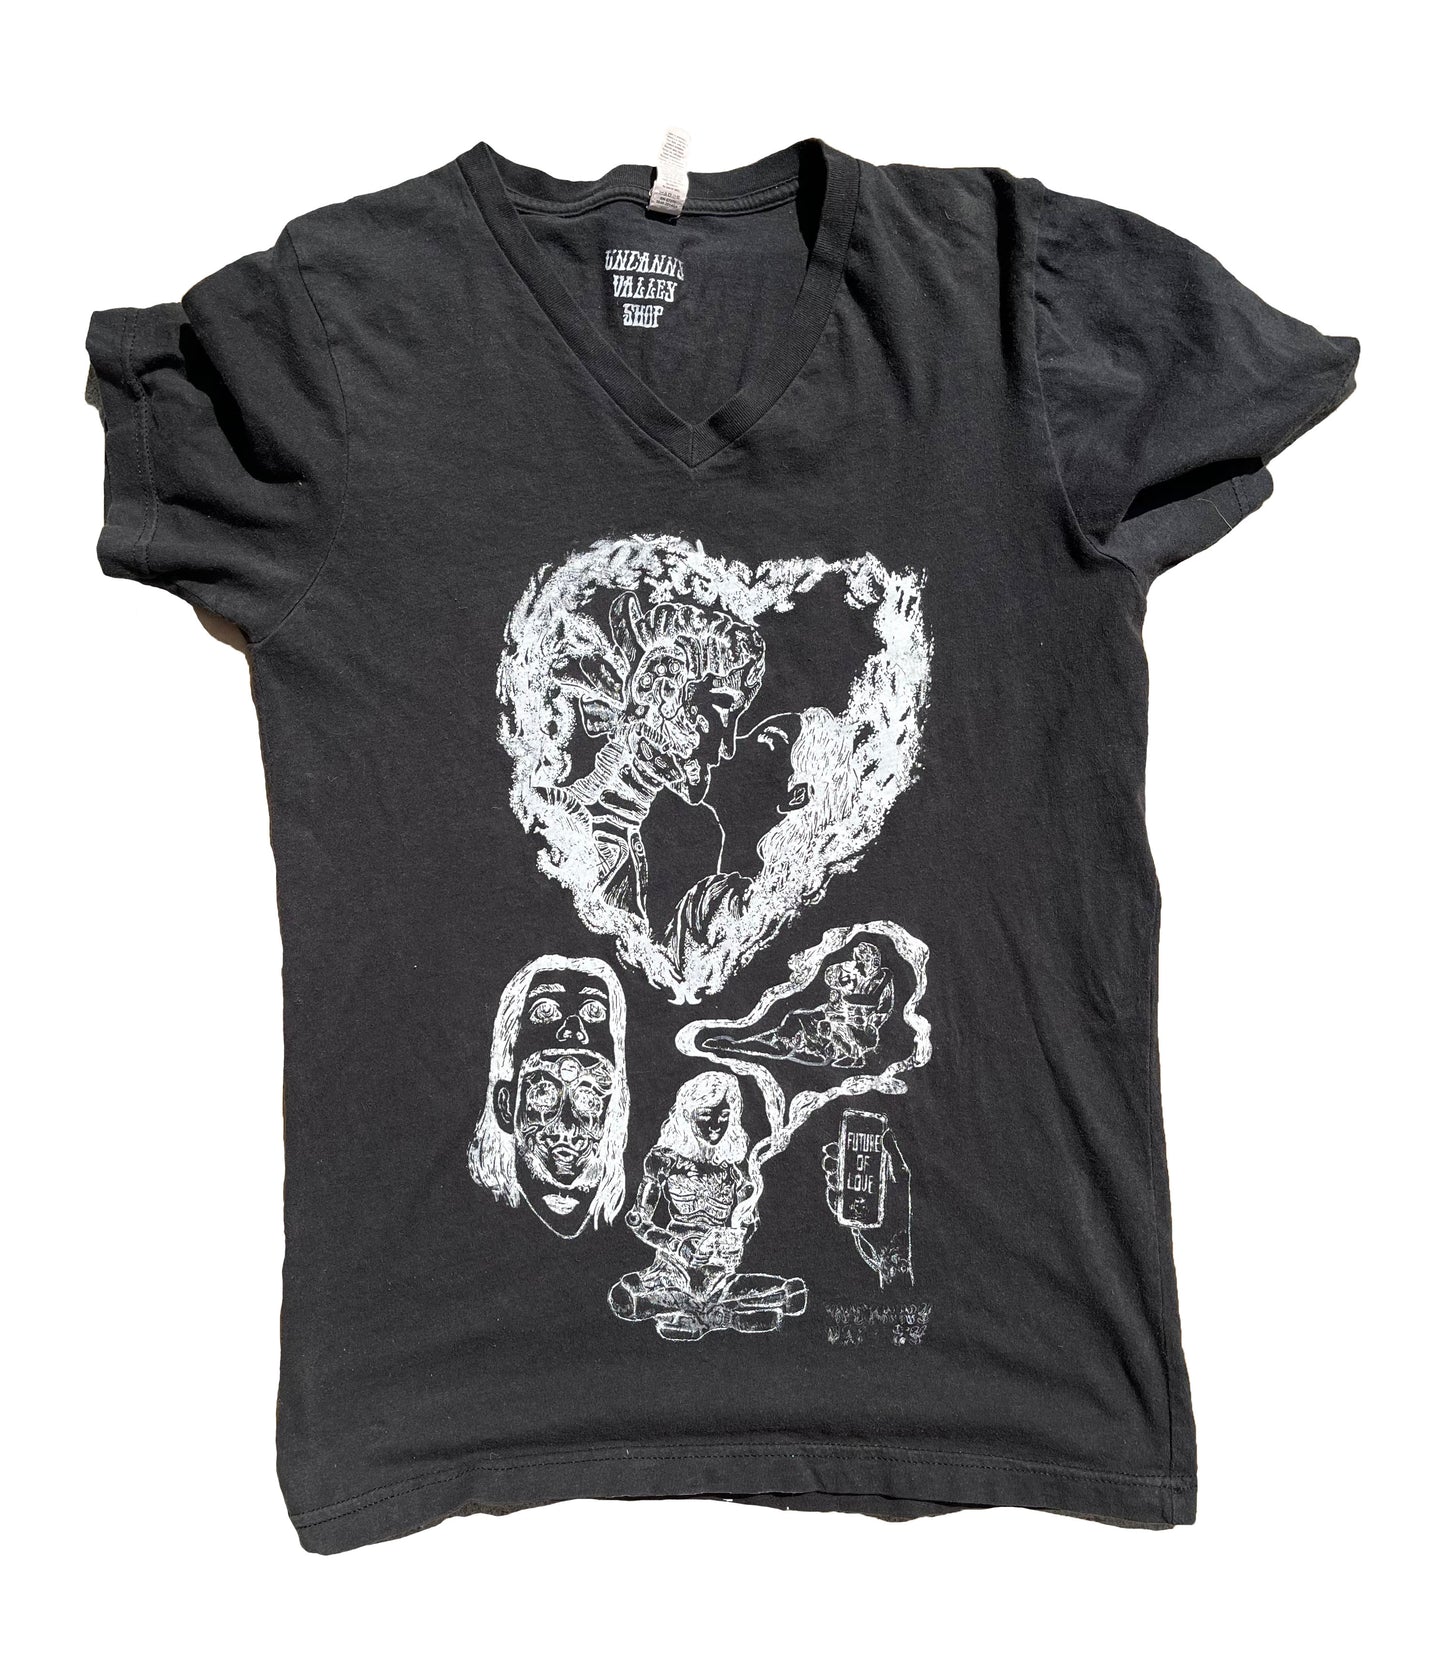 Future of Love SMALL black short sleeve graphic tee shirt